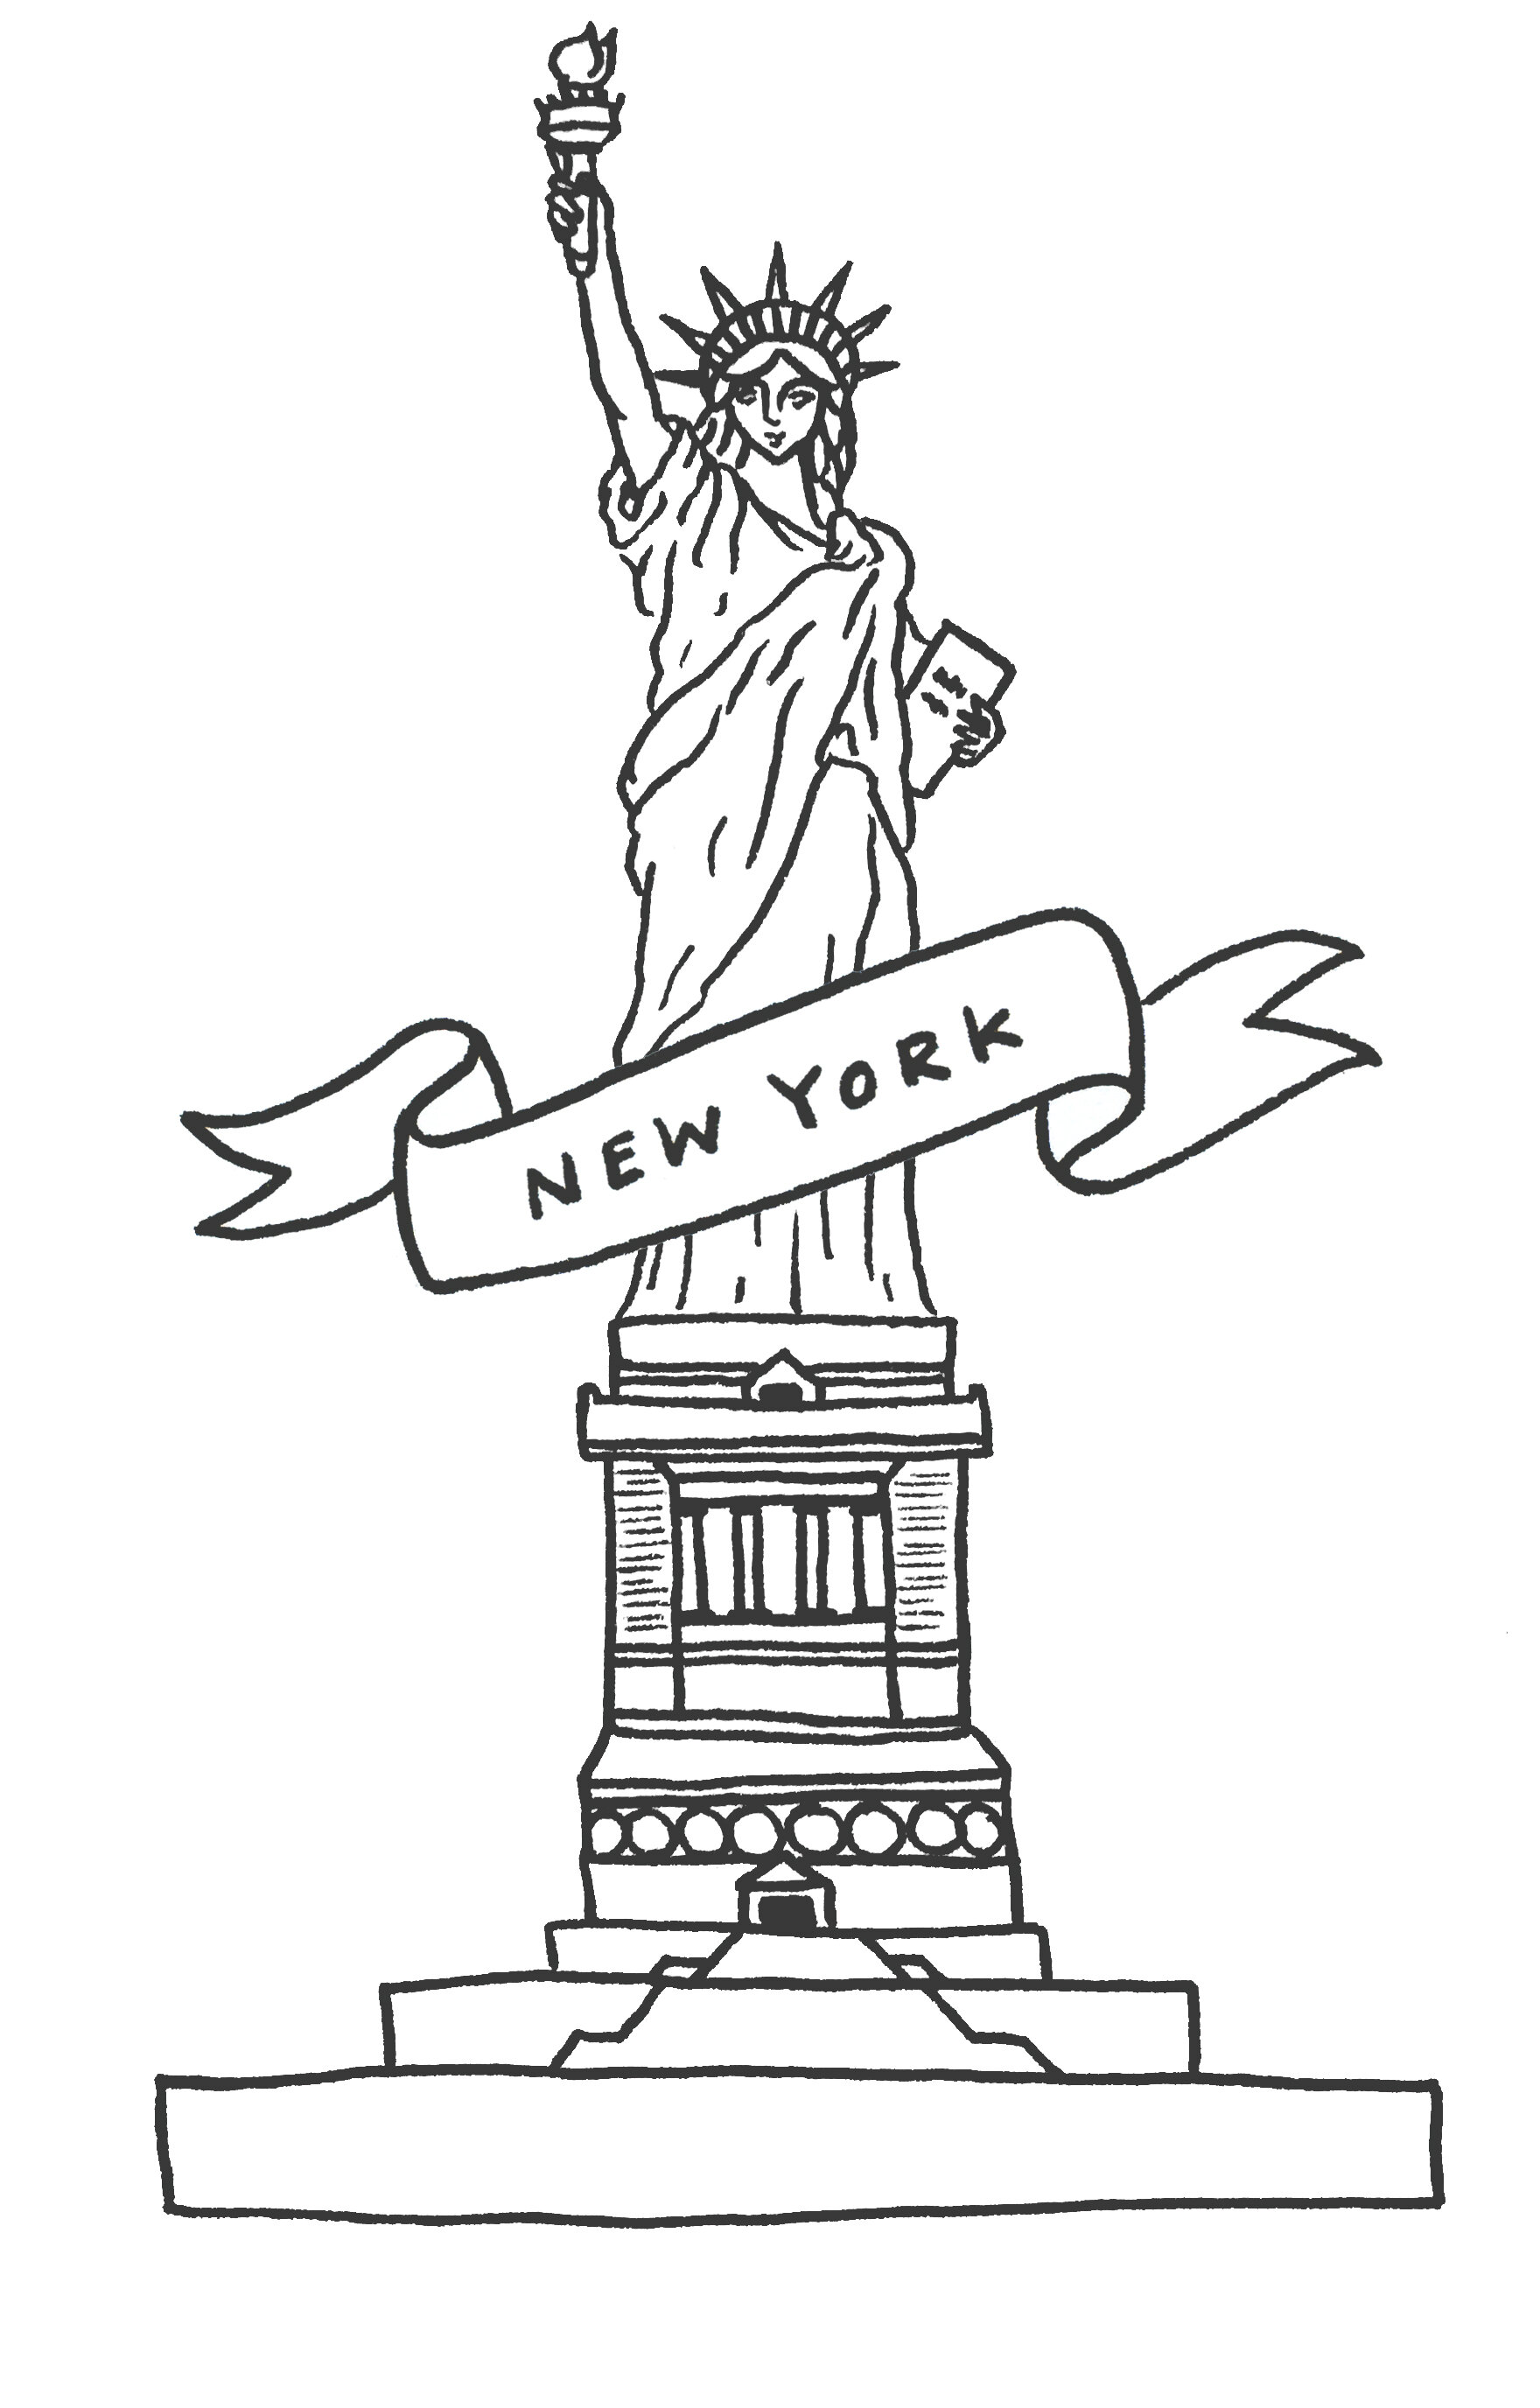 New York w. Banner v2 Grey.jpg